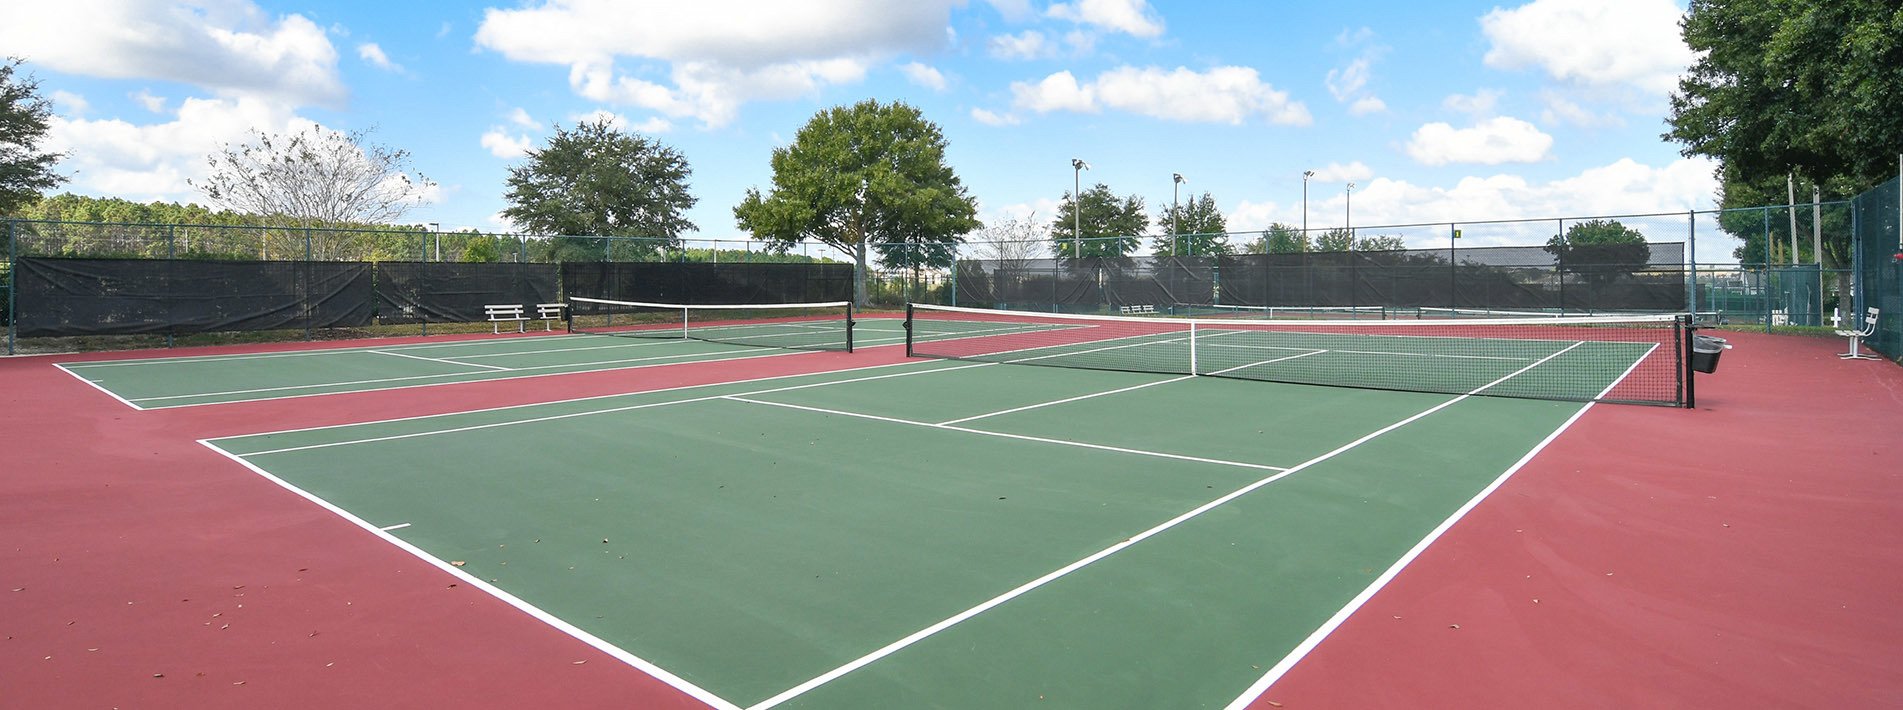 Kings Ridge - 55+ Clermont, FL - Tennis Courts